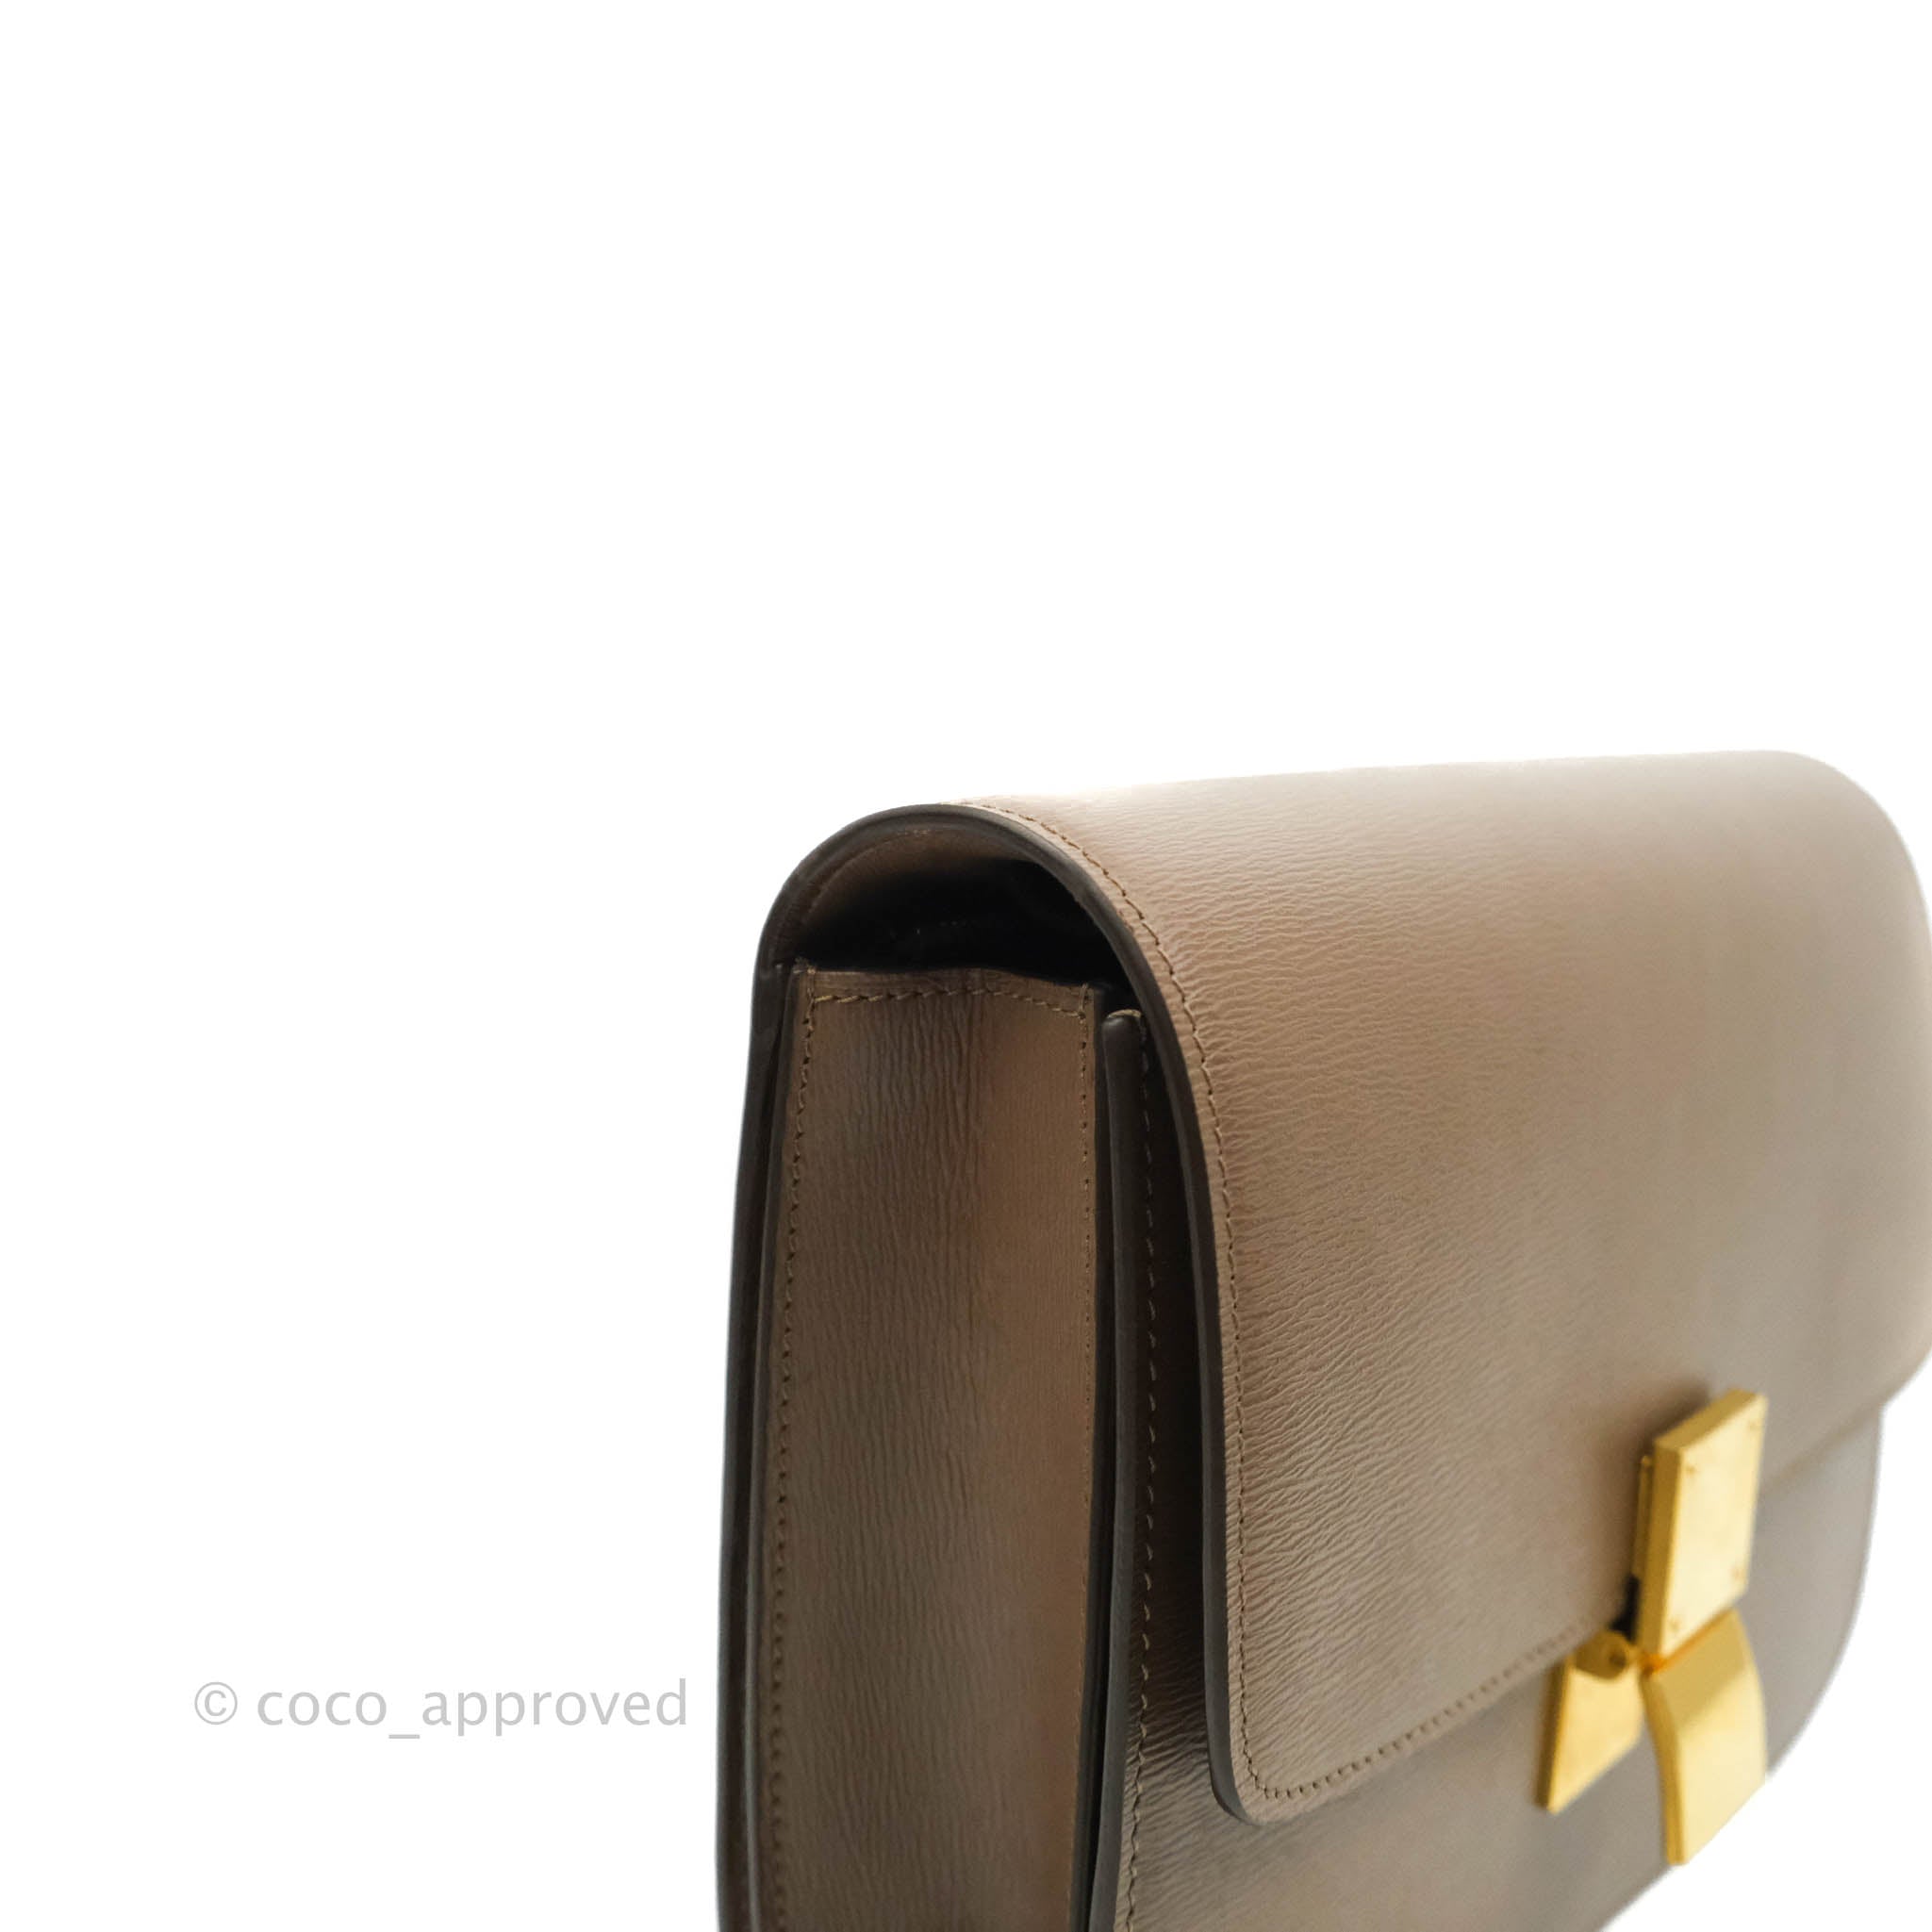 CELINE Small Classic Bag In Calfskin 189183 – LussoCitta